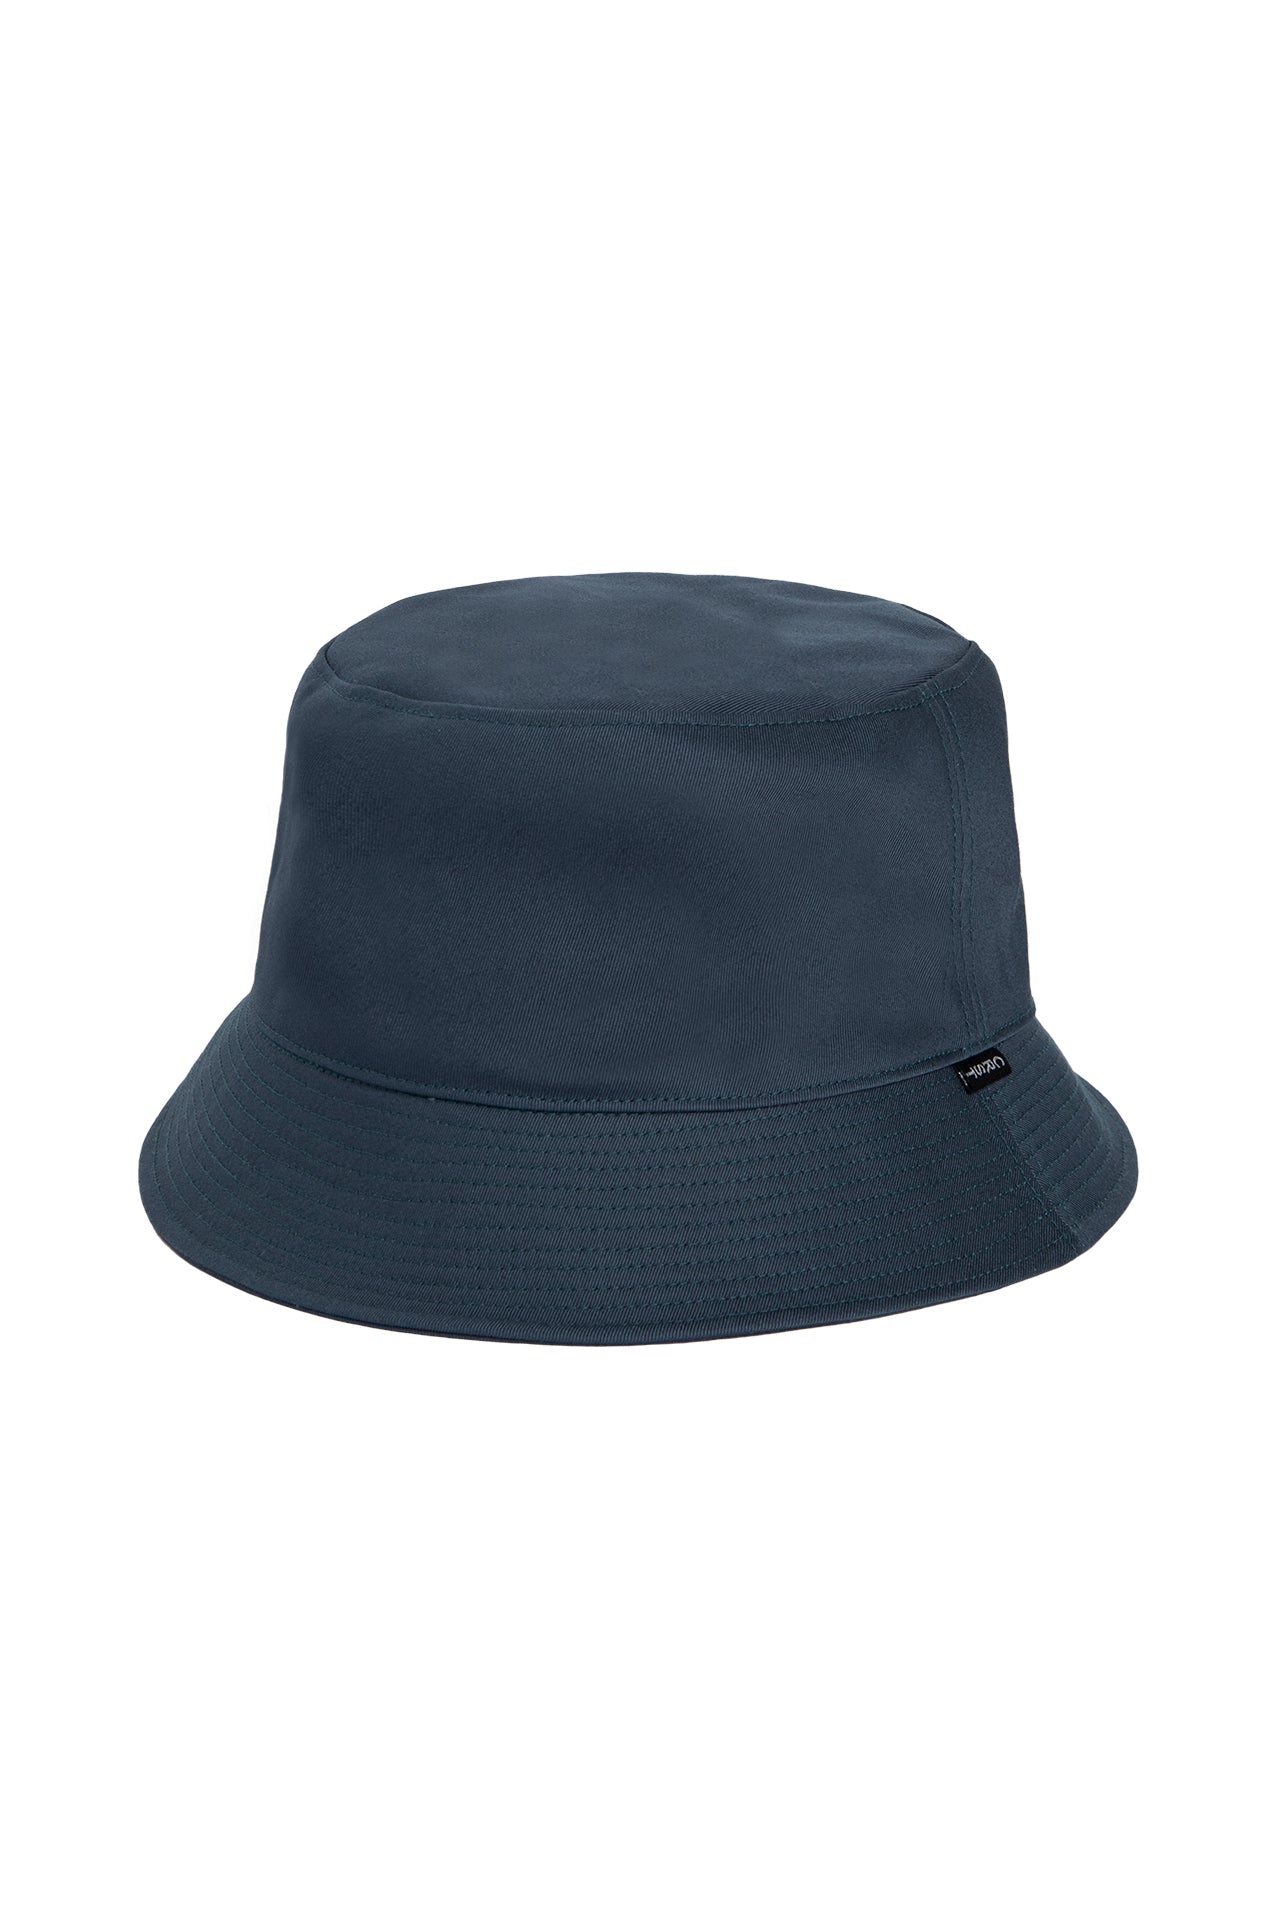 CREST - Resident Bucket Hat - Petrol Blue